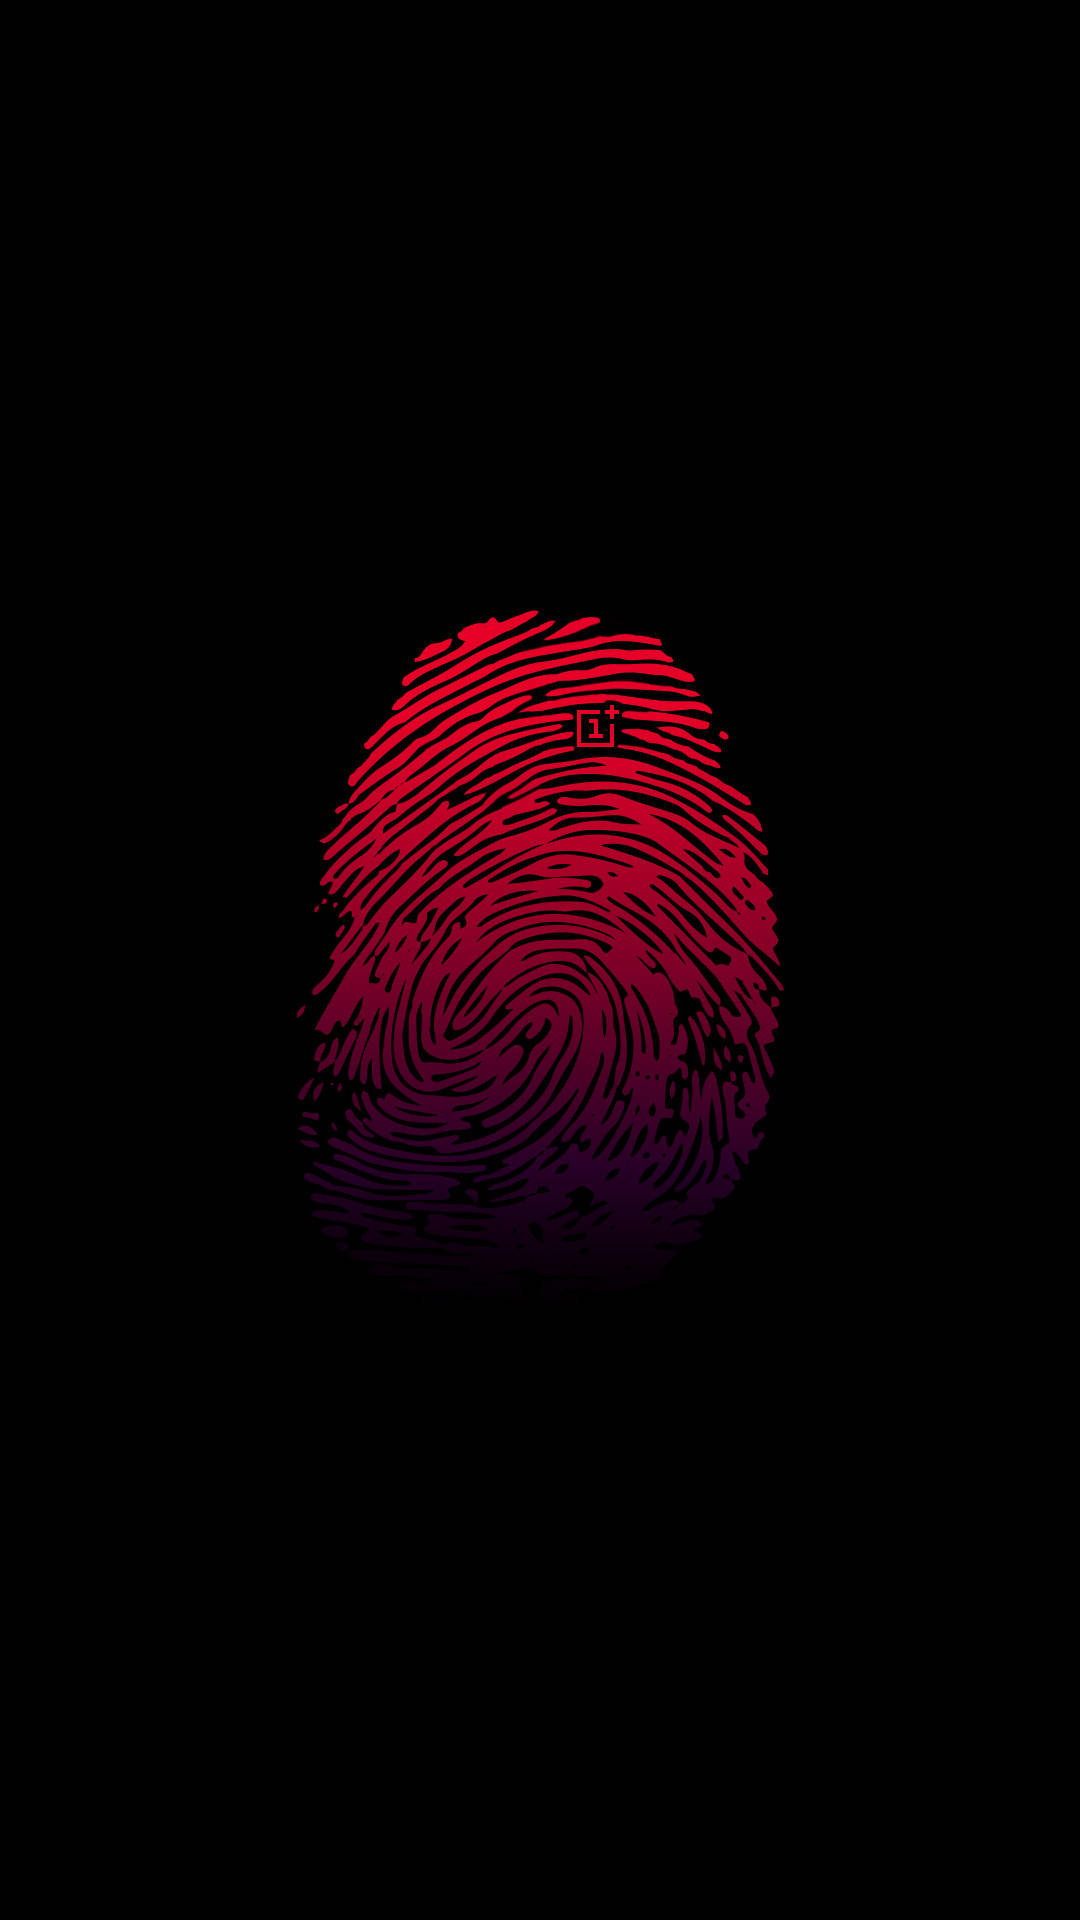 Vibrant Oneplus Red Thumbprint Image